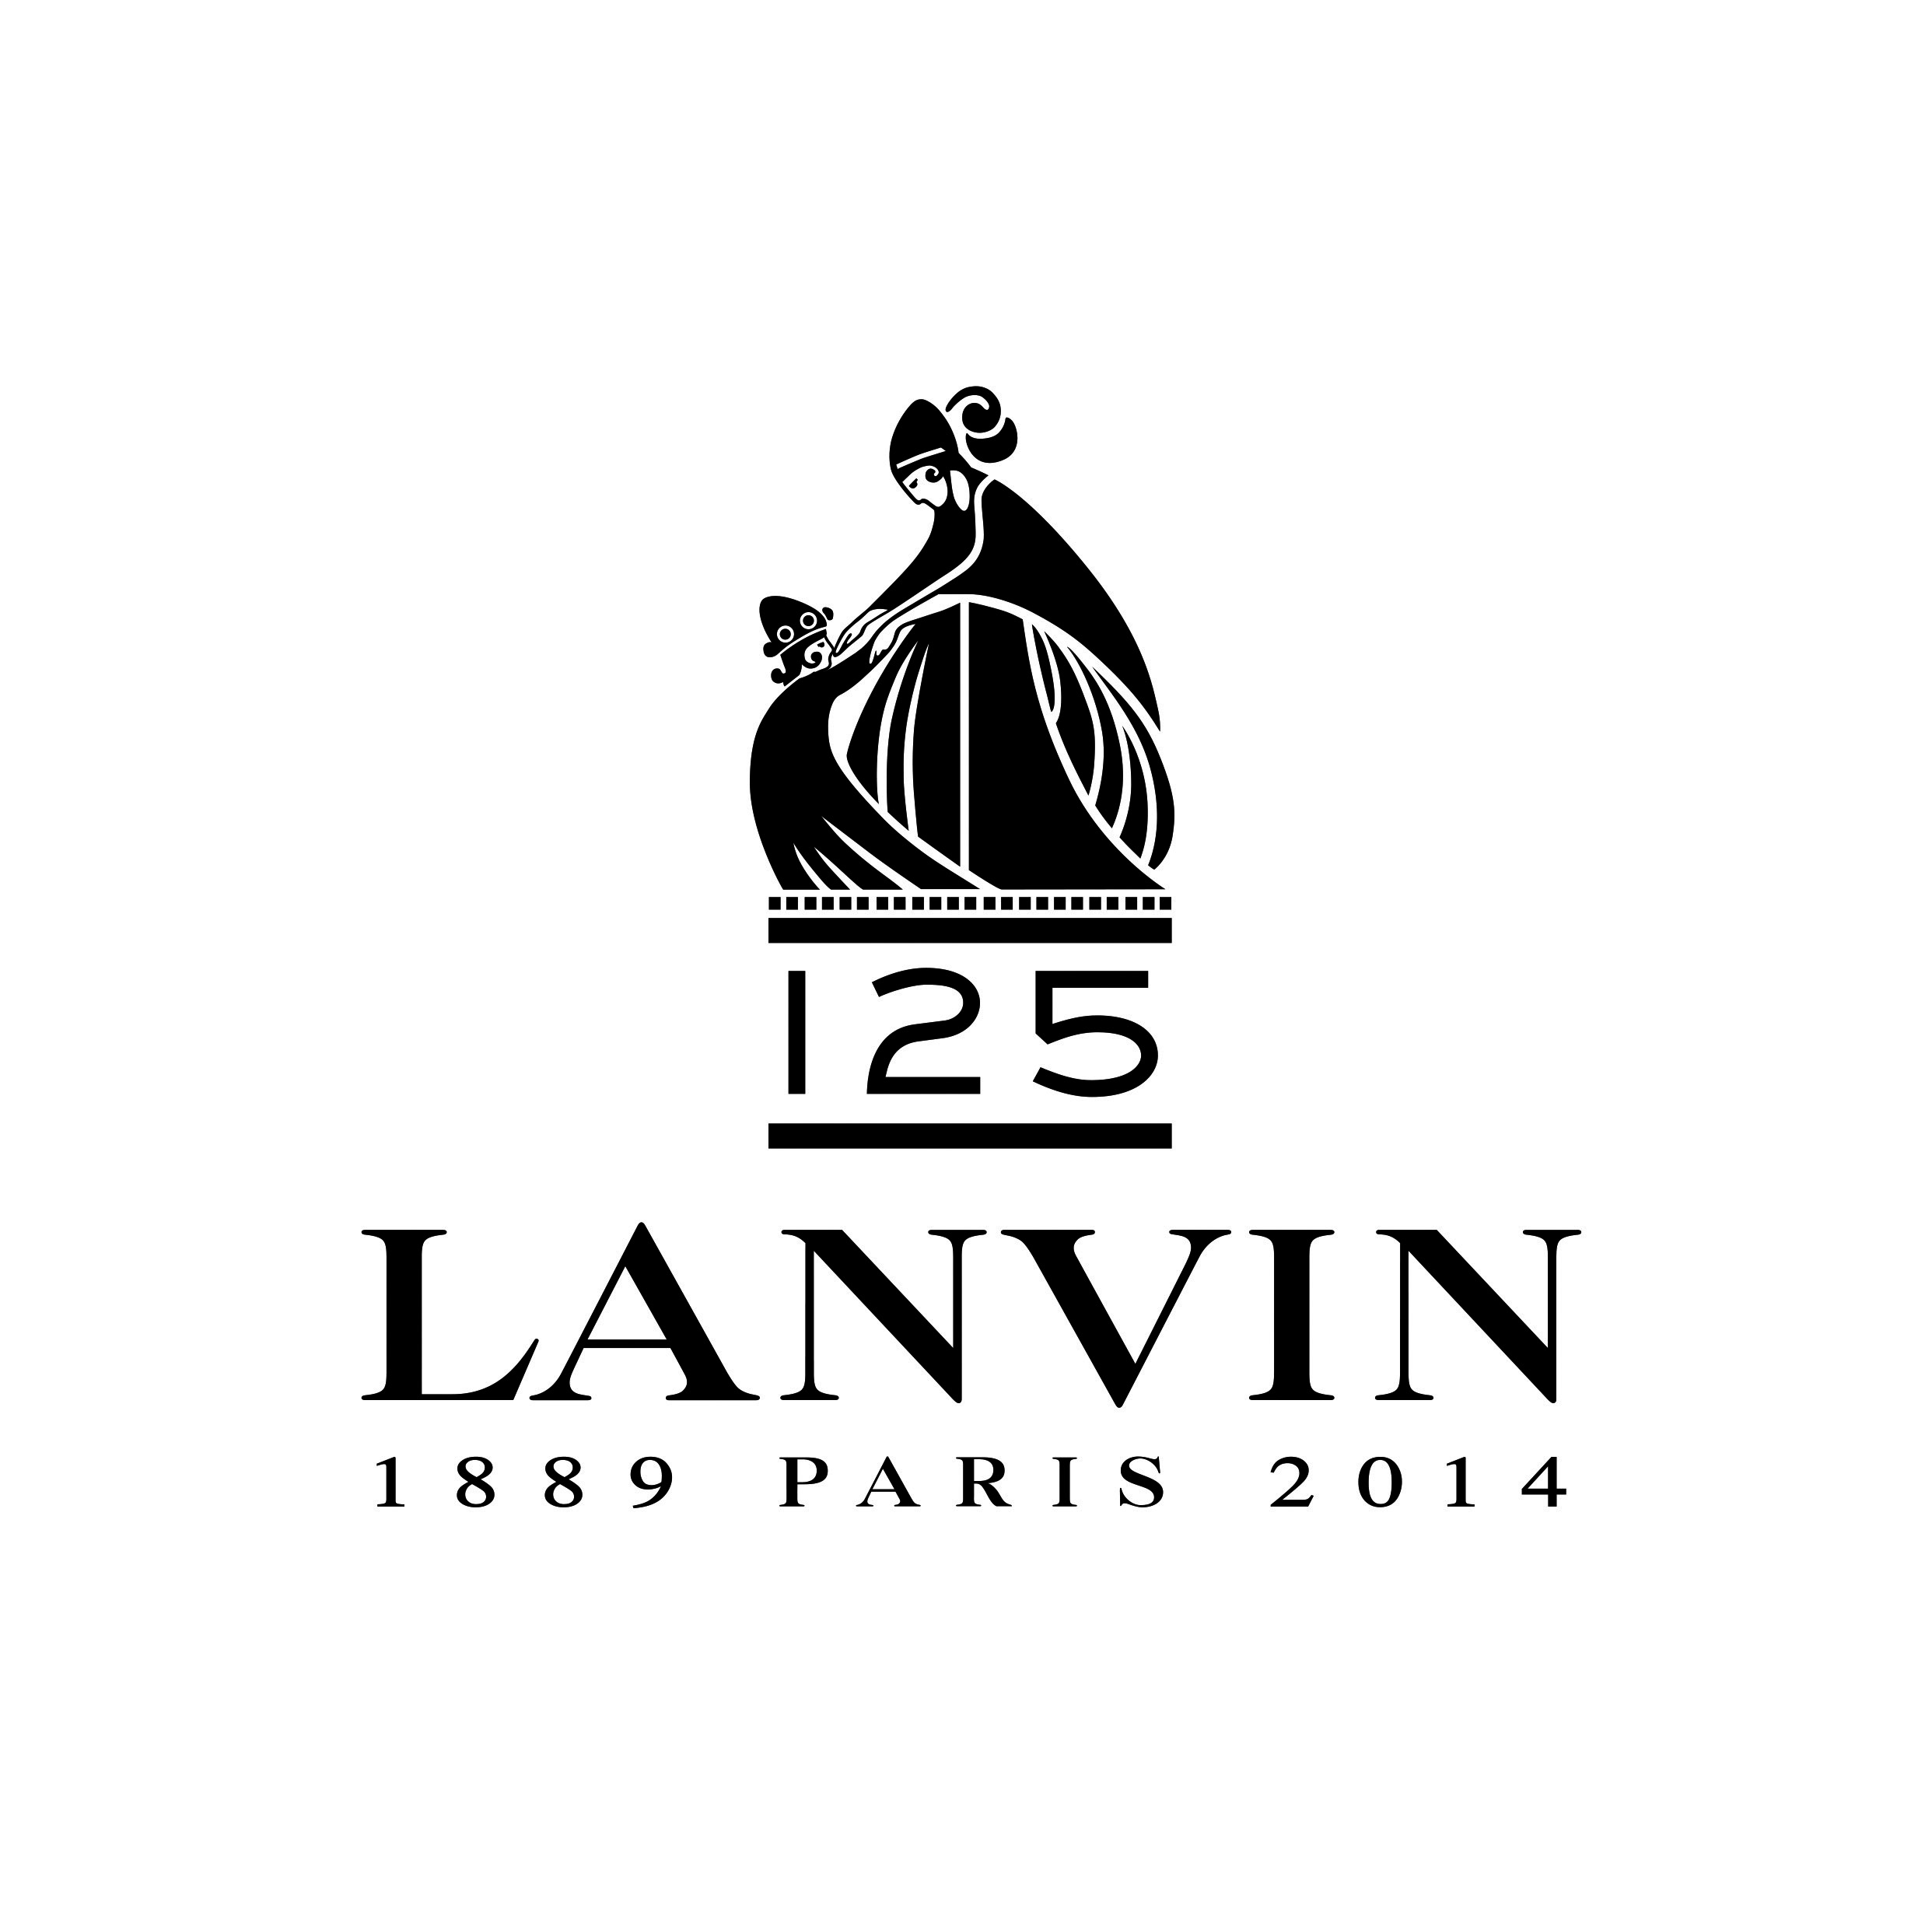 lanvin-logo-125ans-Noir-21x21-300dpi.jpg